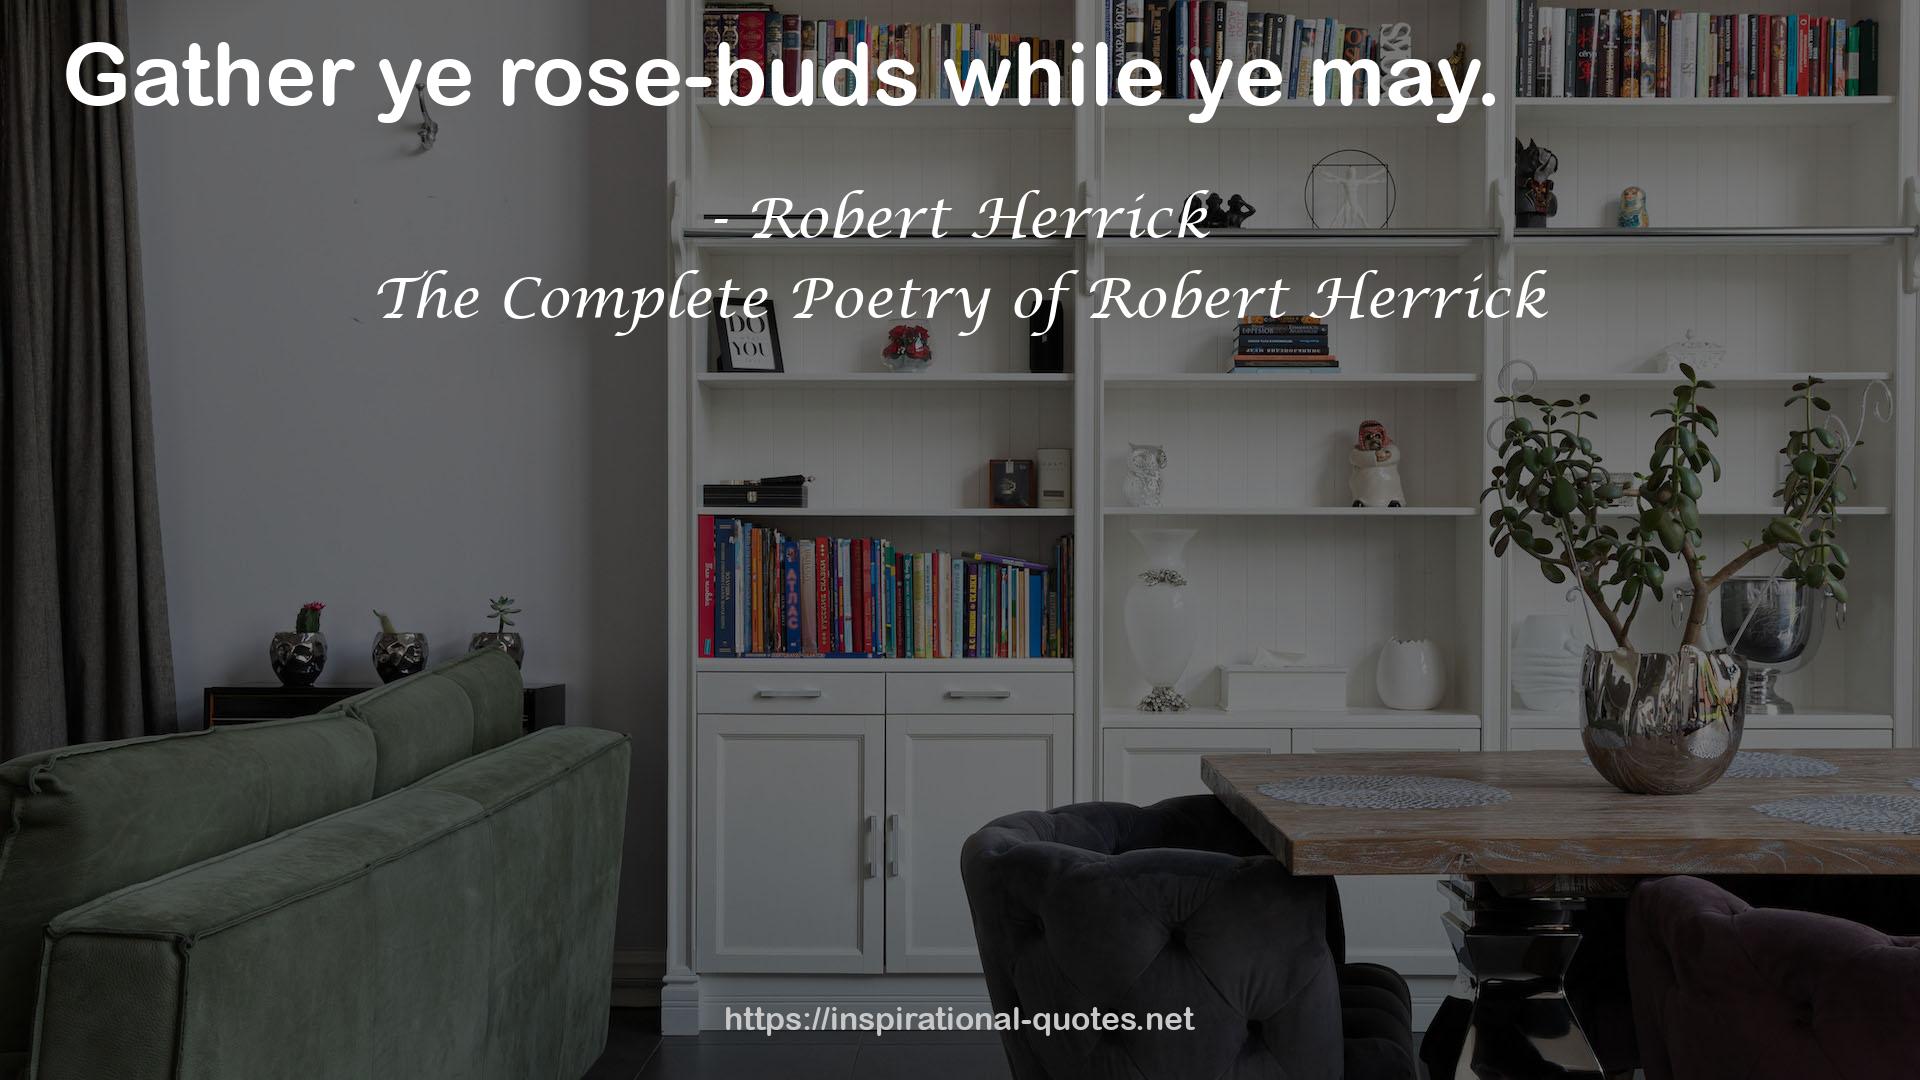 The Complete Poetry of Robert Herrick QUOTES